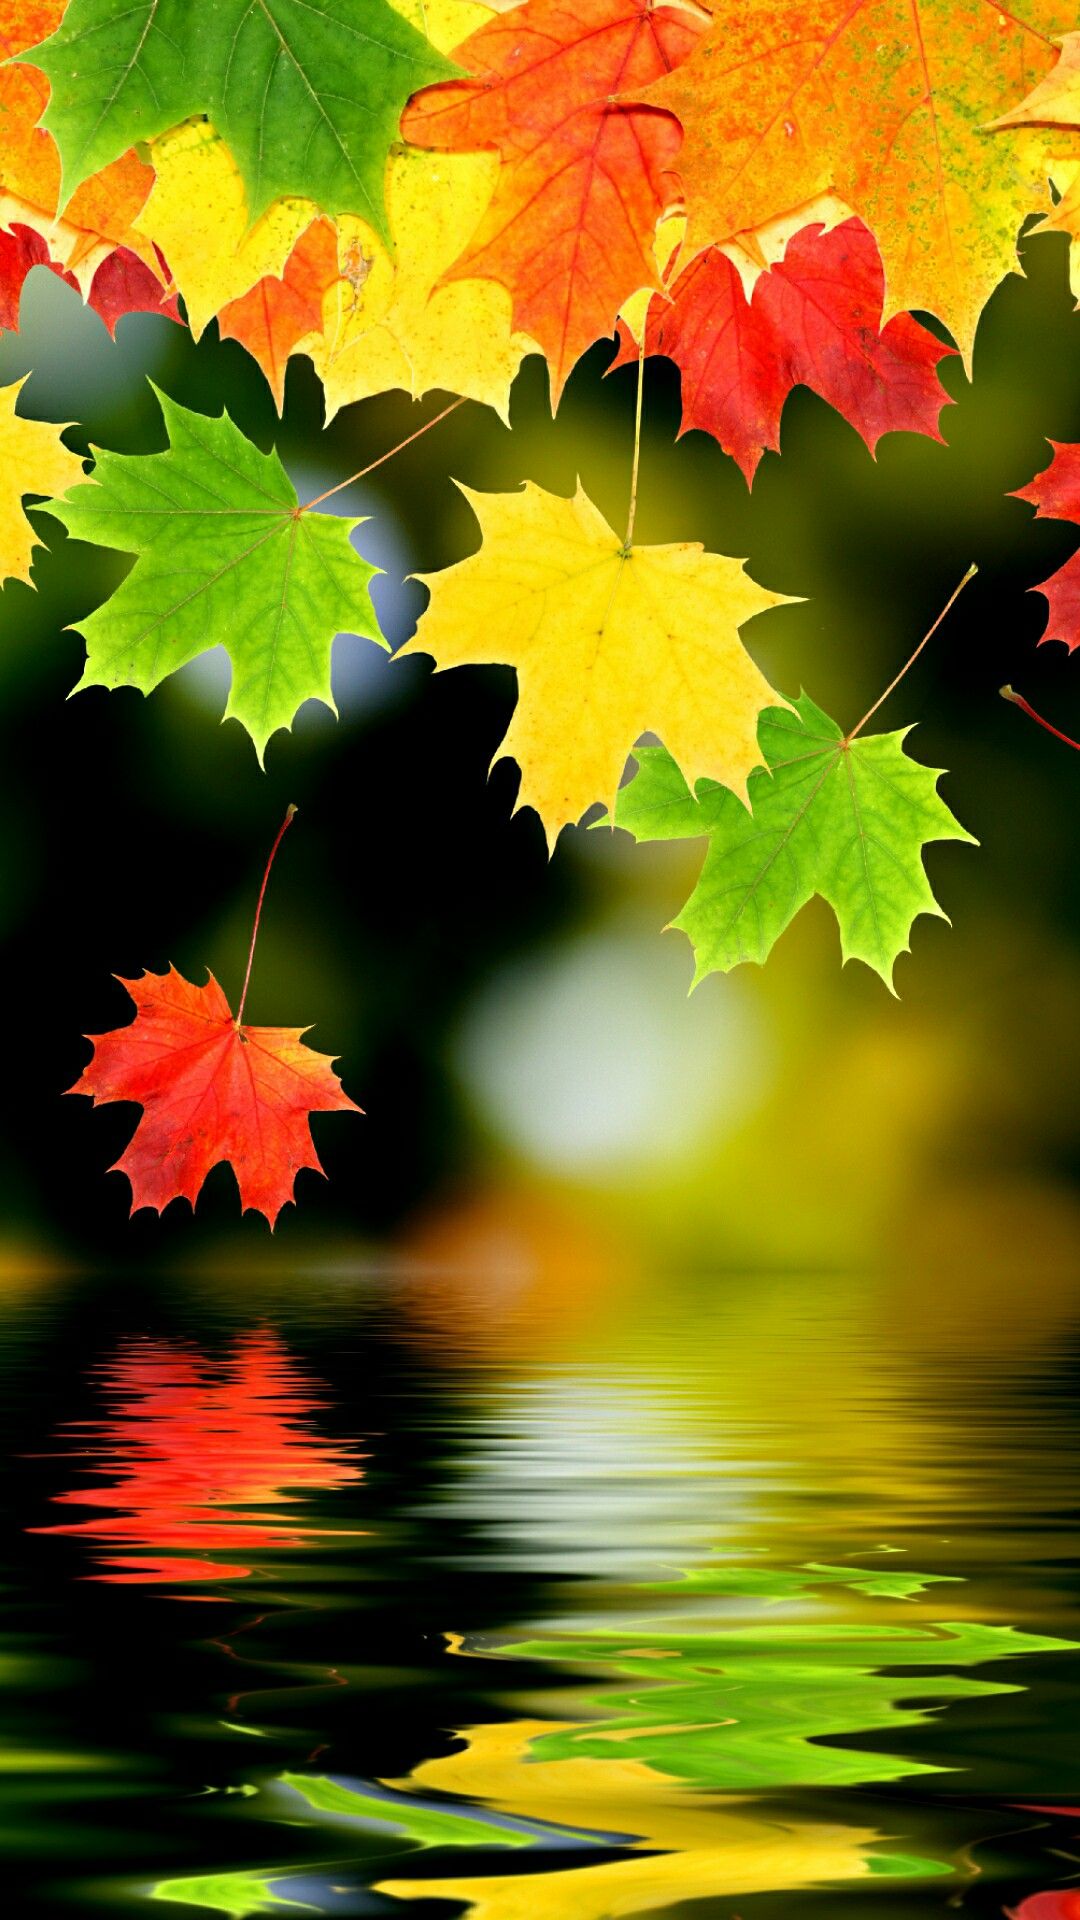 autumn live wallpaper,leaf,nature,maple leaf,green,tree